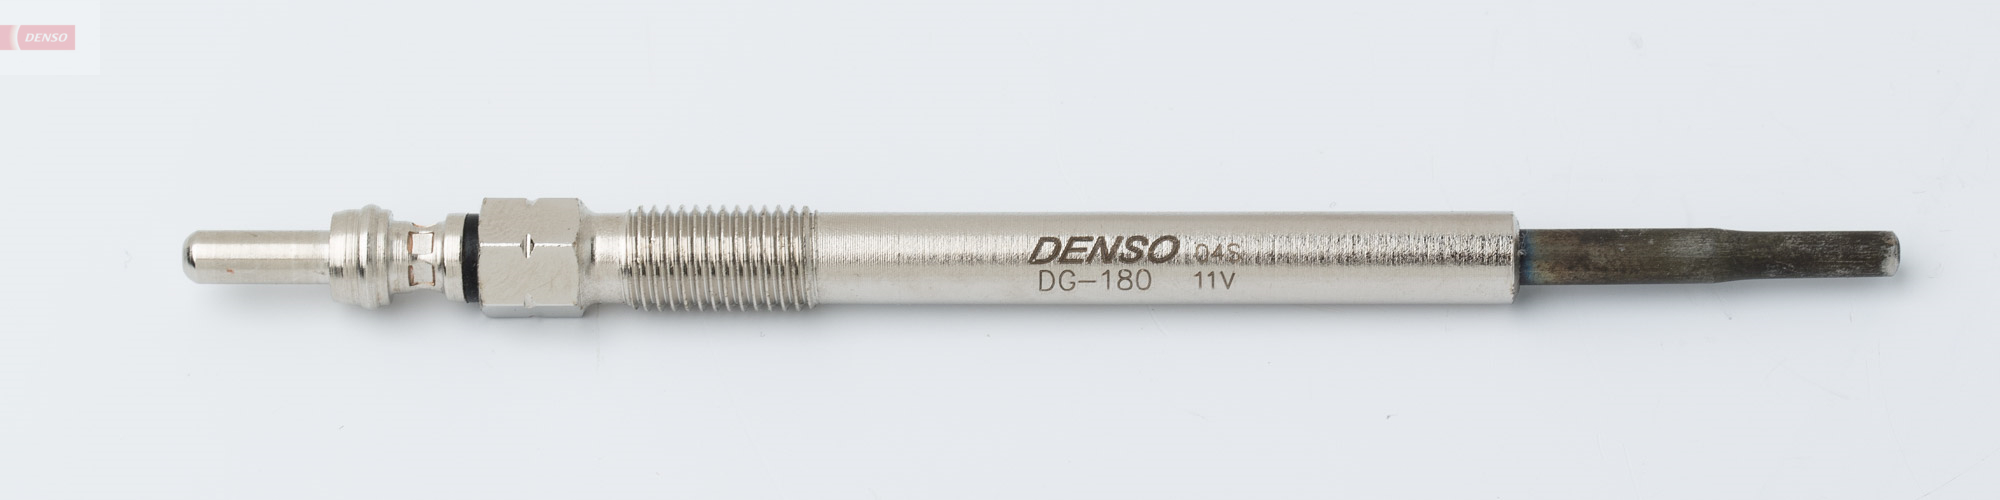 Свеча накаливания   DG-180   DENSO